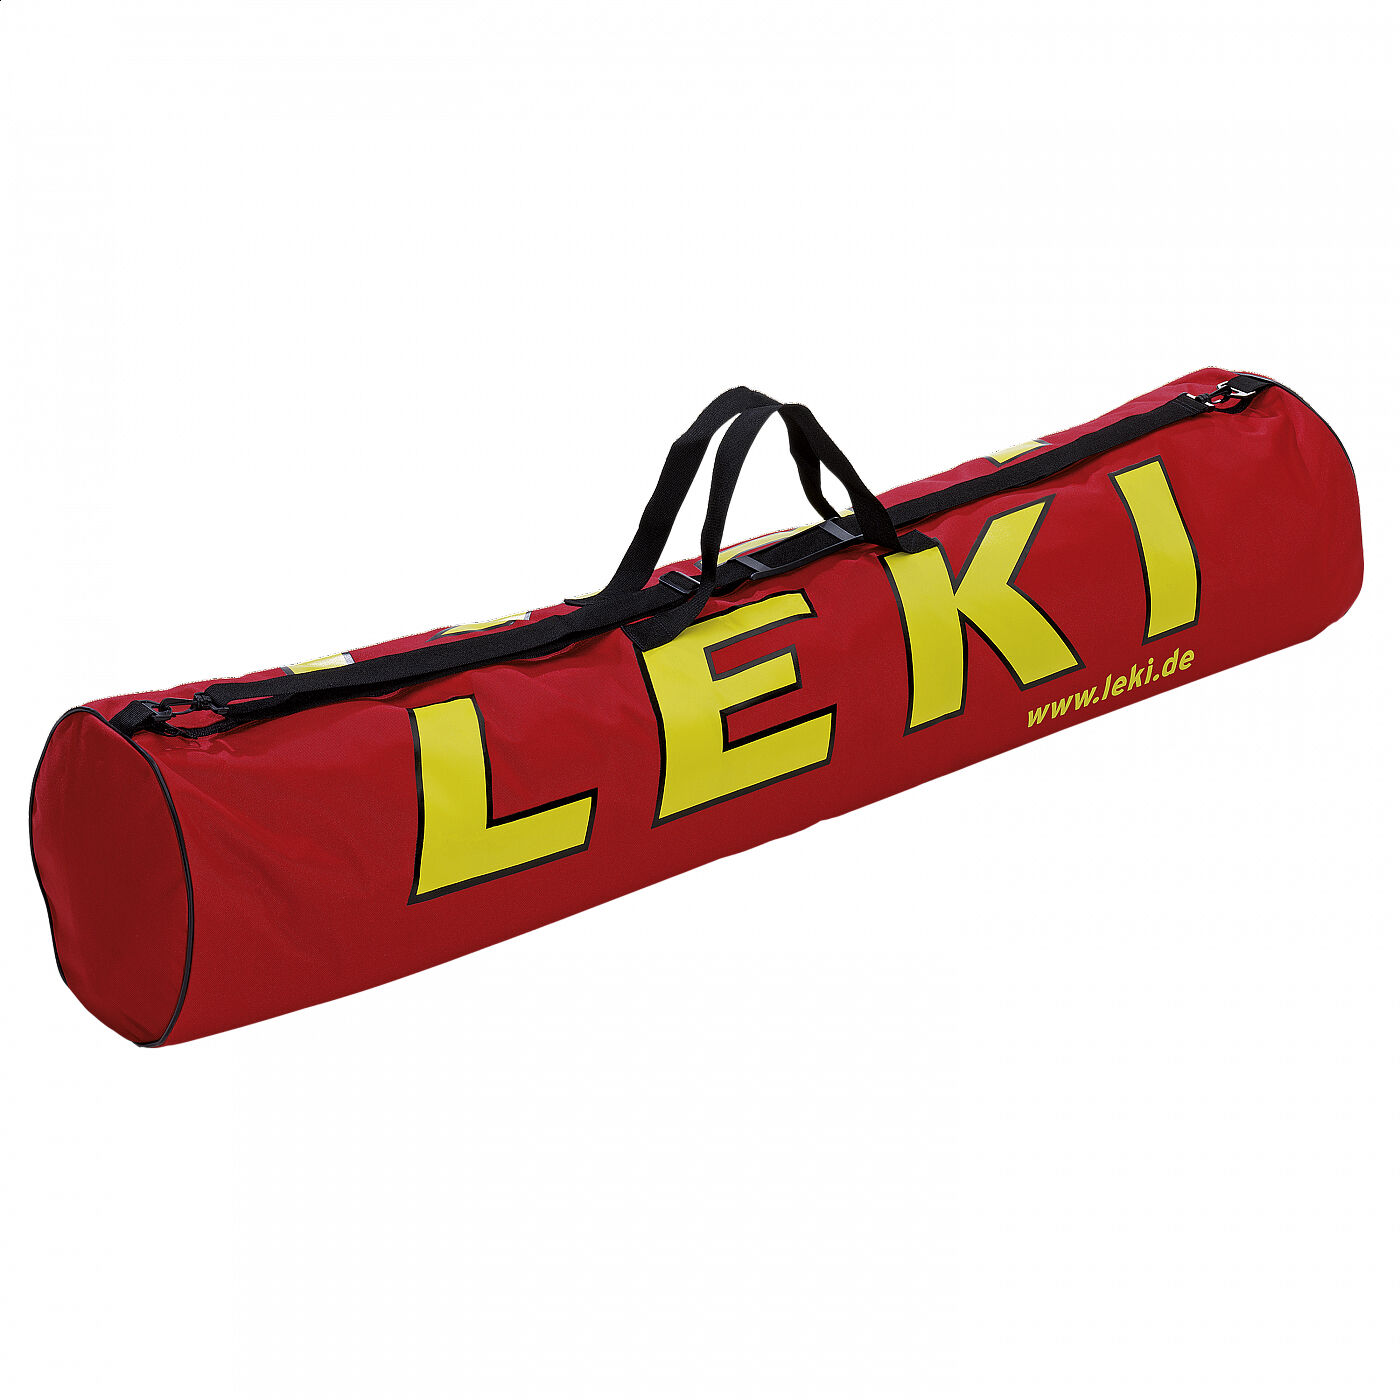 Leki - Trainer Pole bag - 15 pairs of poles / 140 cm